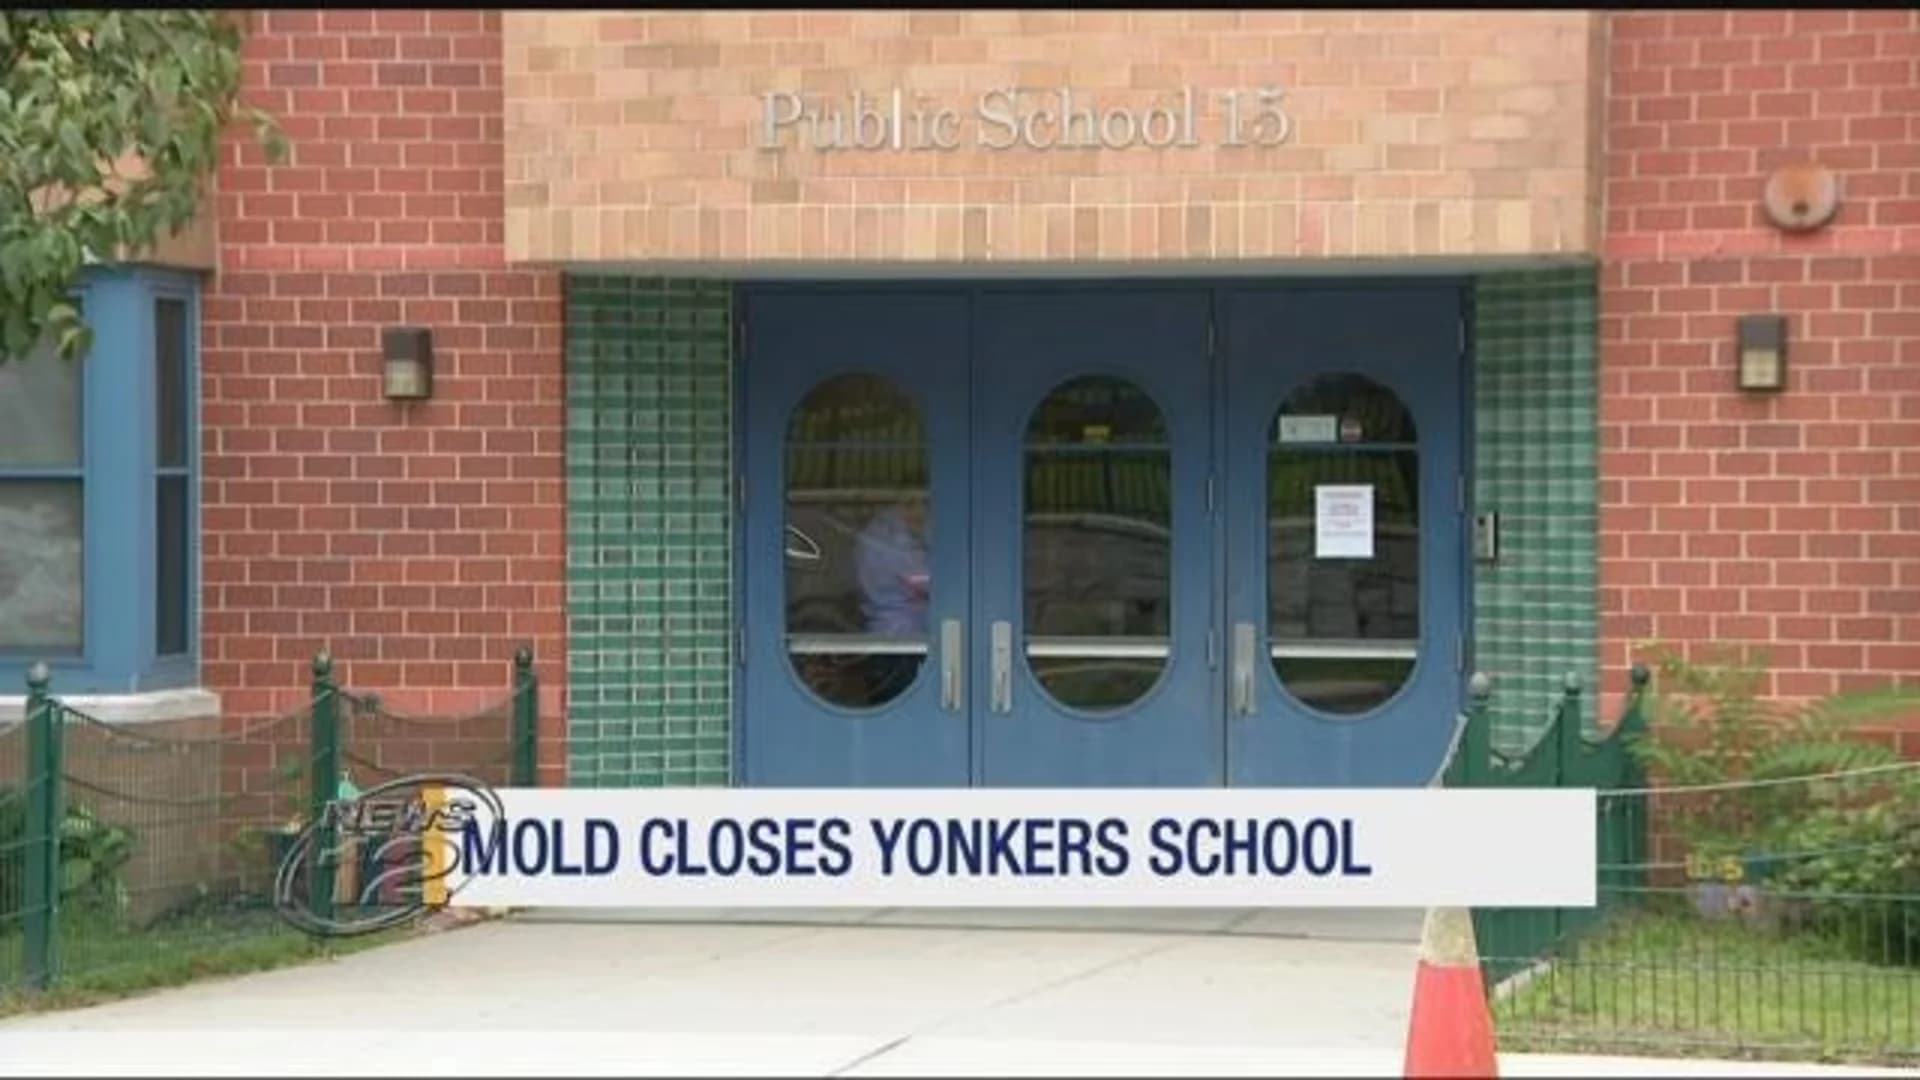 Black mold shuts down Yonkers school